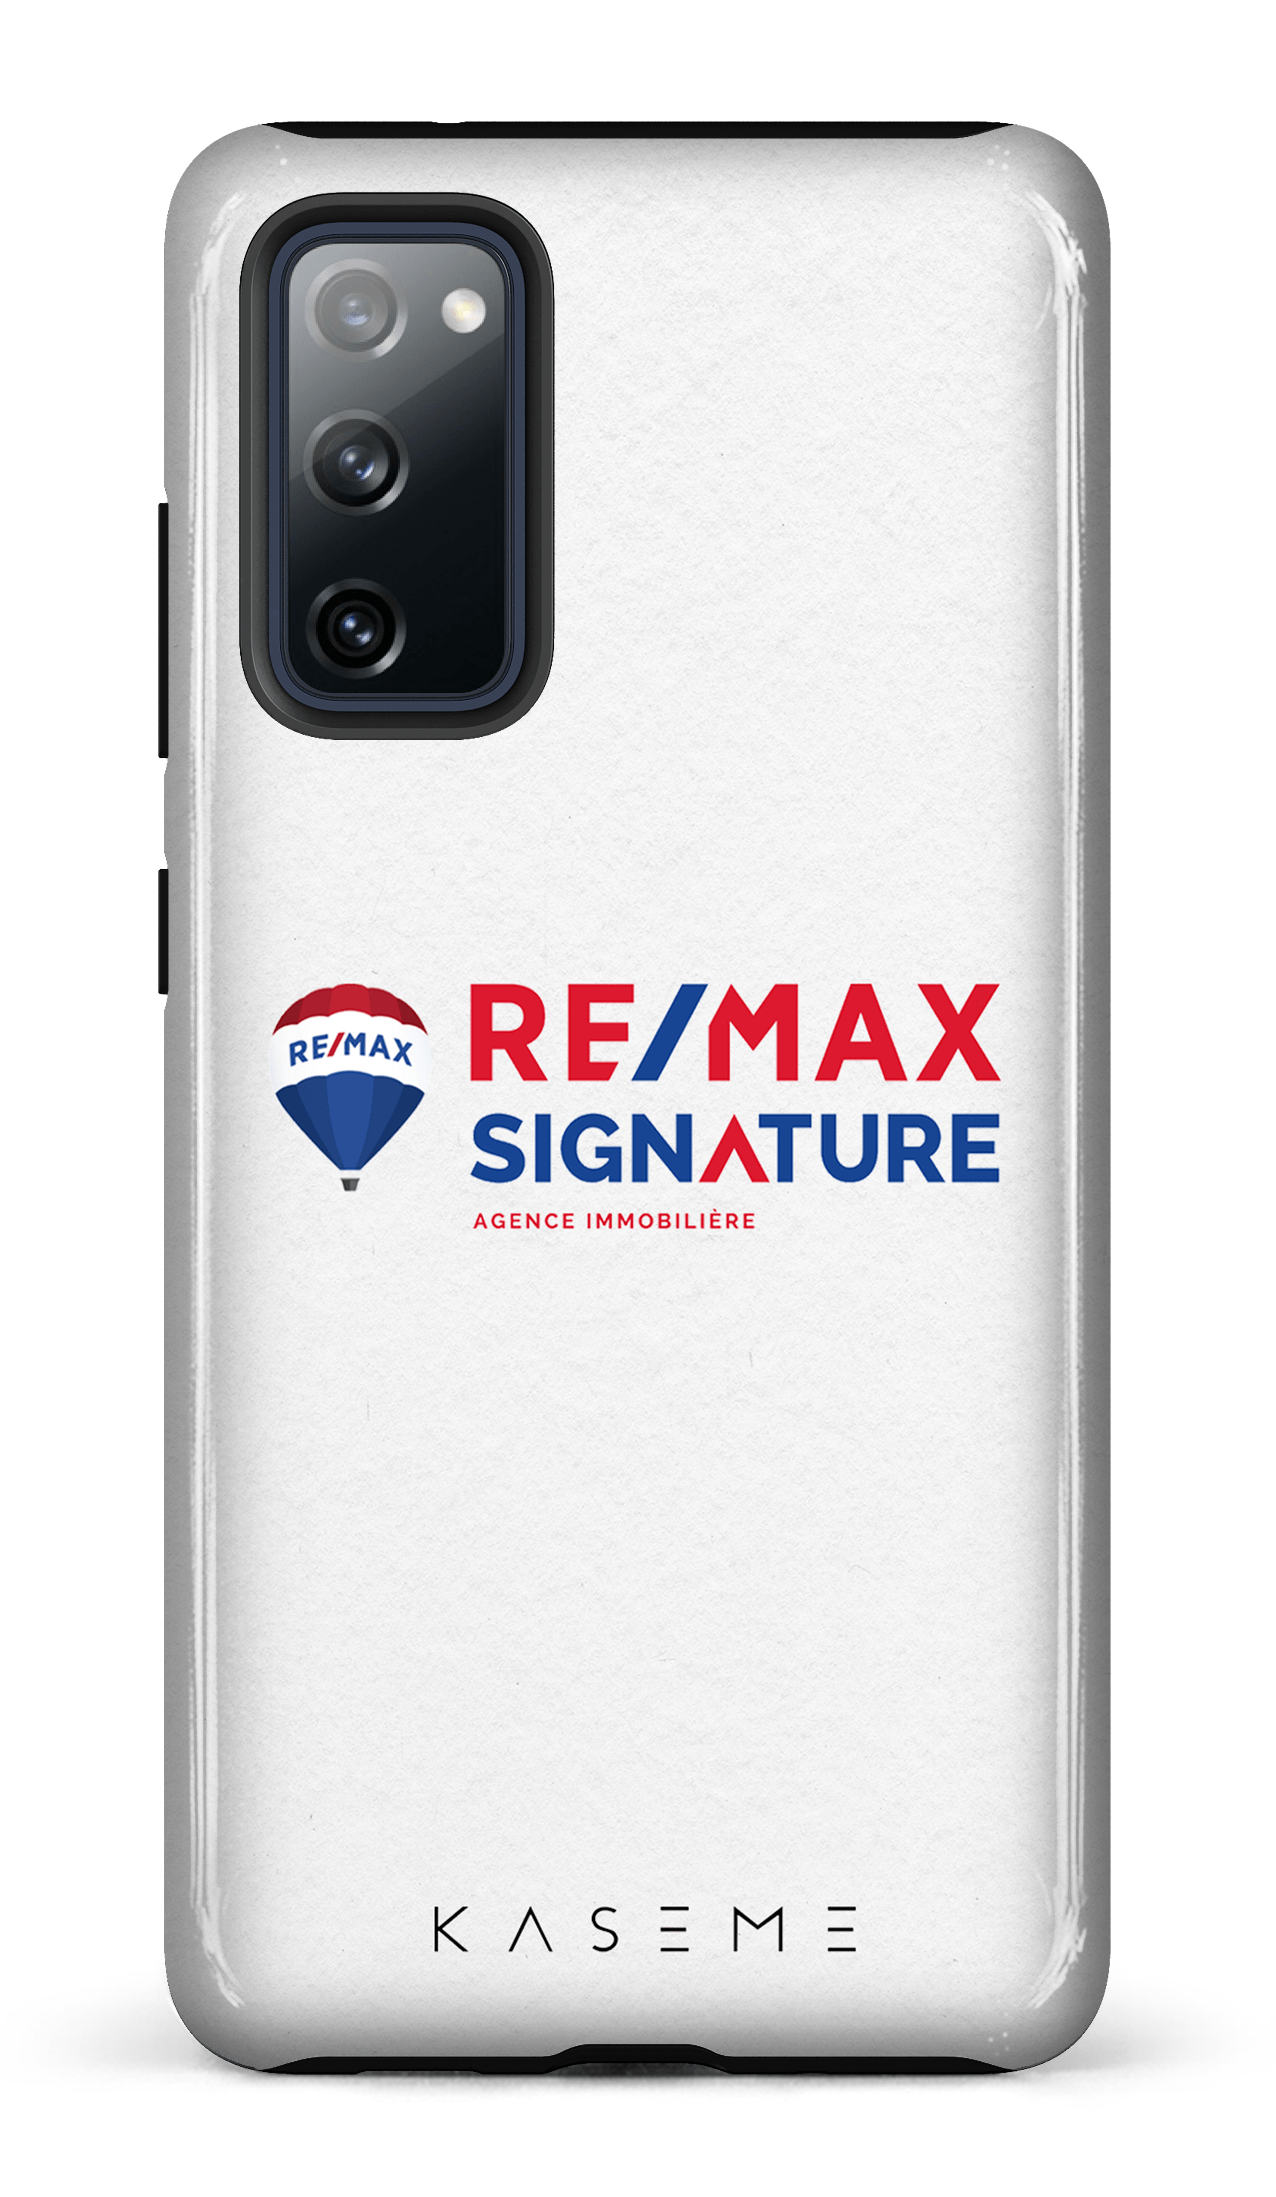 Remax Signature Blanc - Galaxy S20 FE